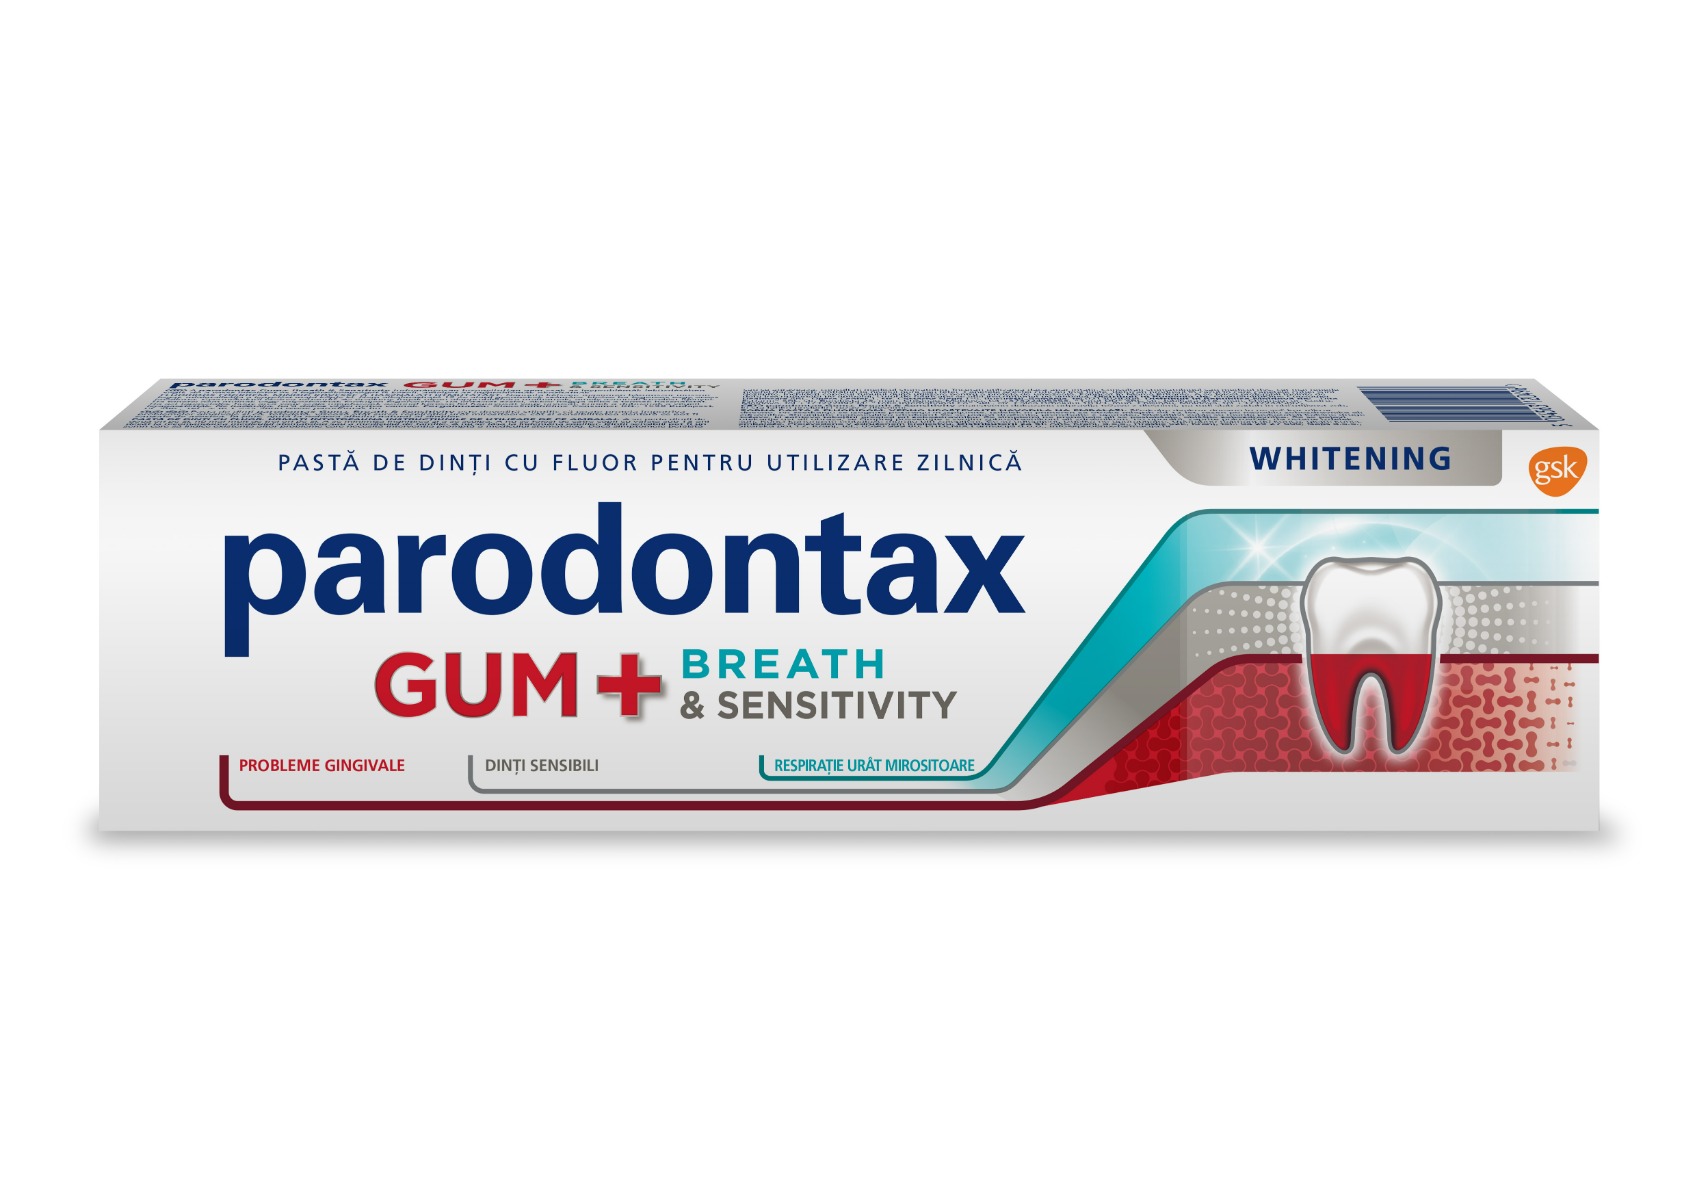 Pasta de dinti Gum + Breath Sensitivity and Whitening, 75ml, Parodontax